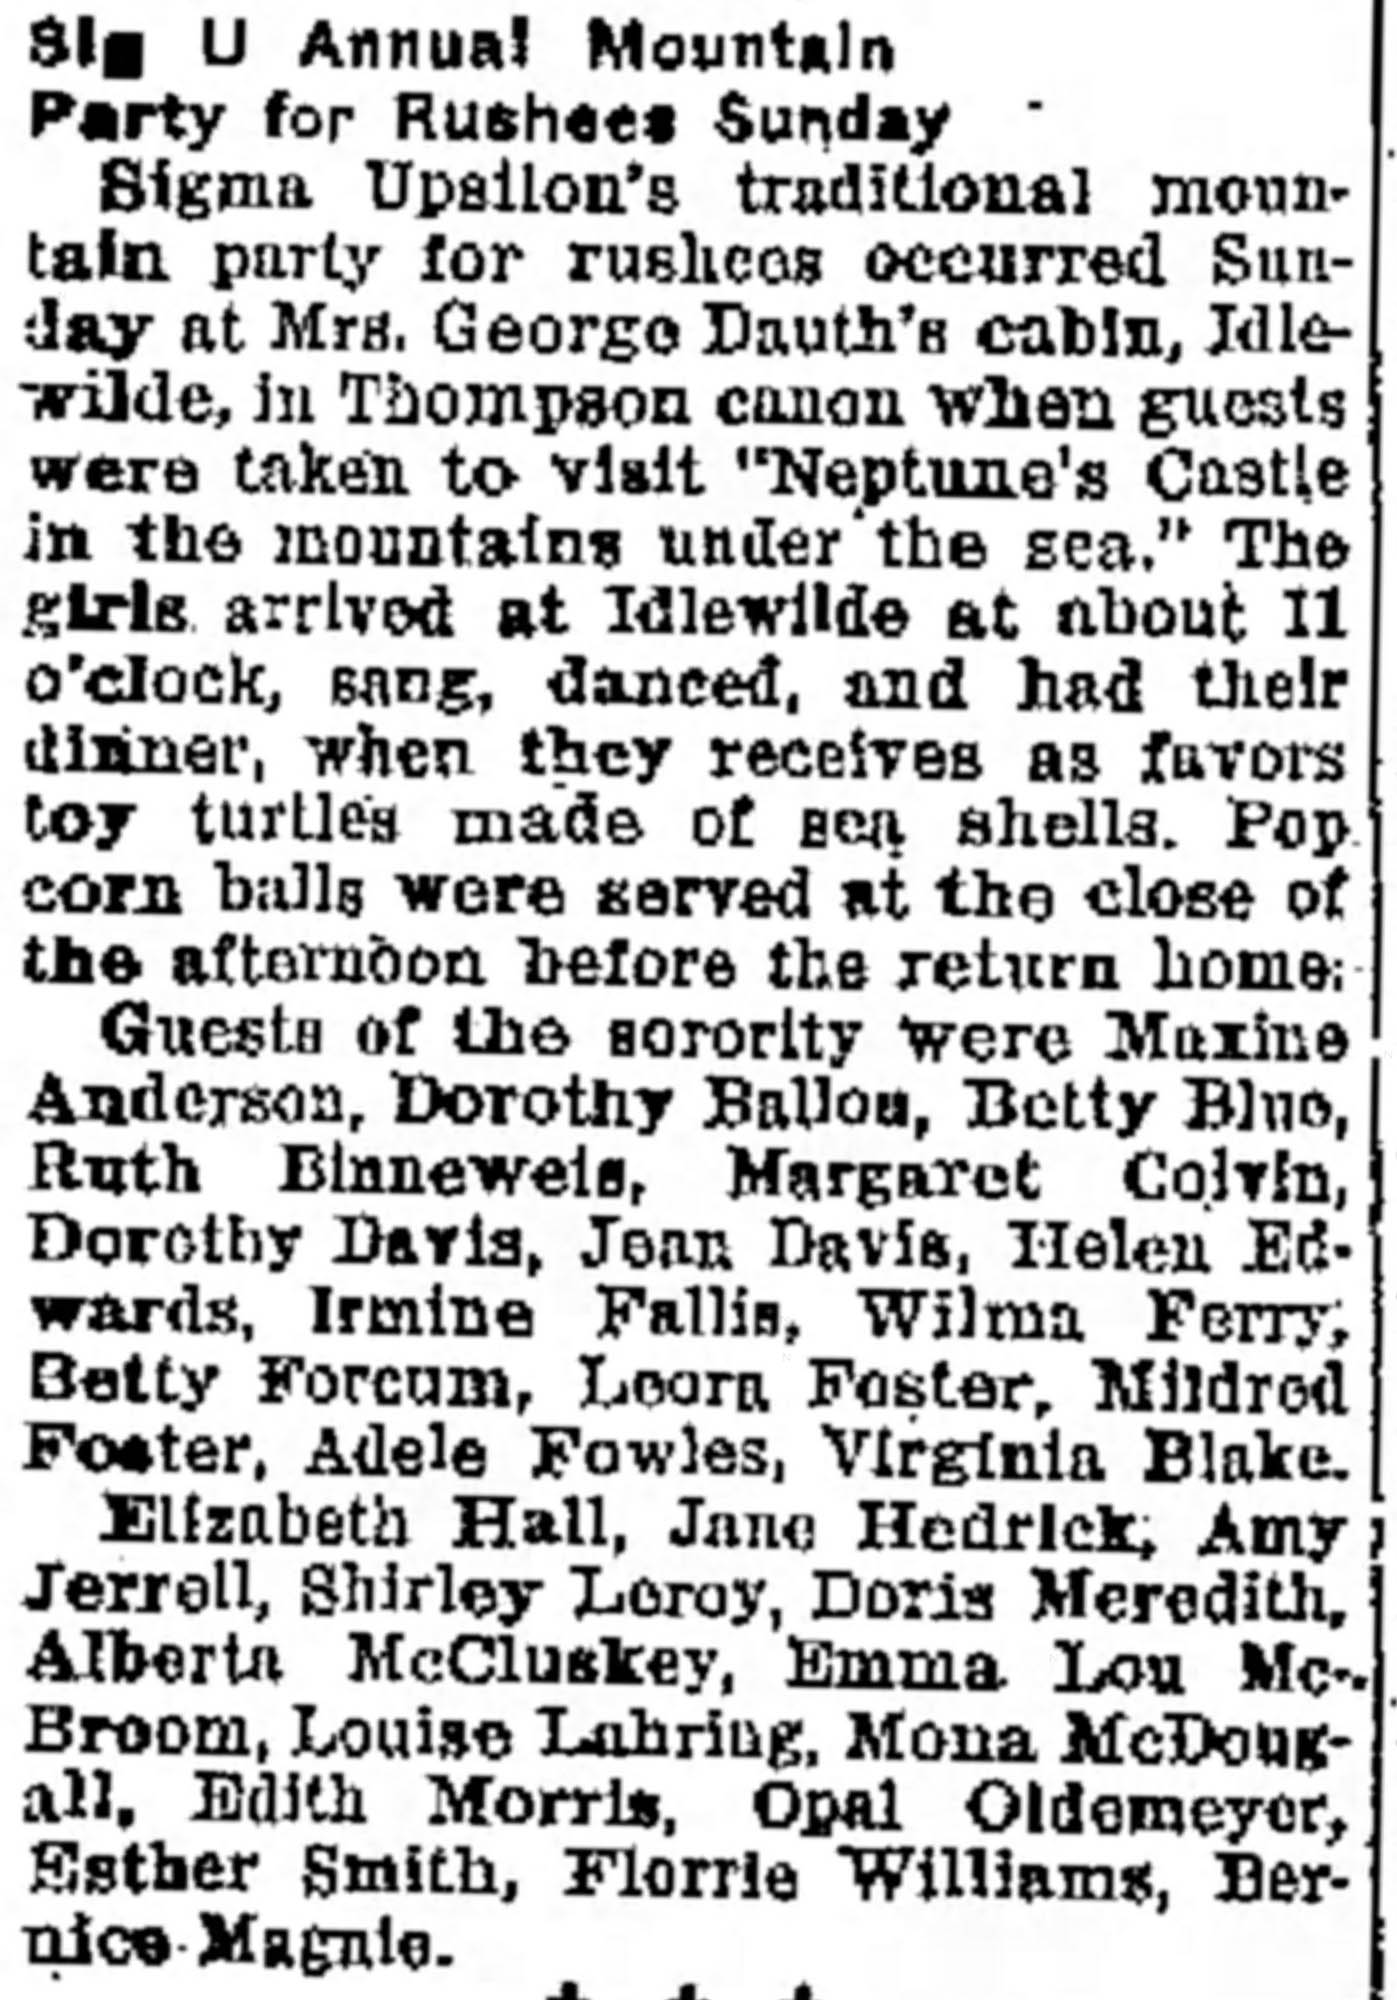 Idlewild Lodge - idlewildlodge.github.io - 1931-10-12 - Greeley Daily Tribune - Florence Dauth Hosts Sig U at Idlewild Lodge